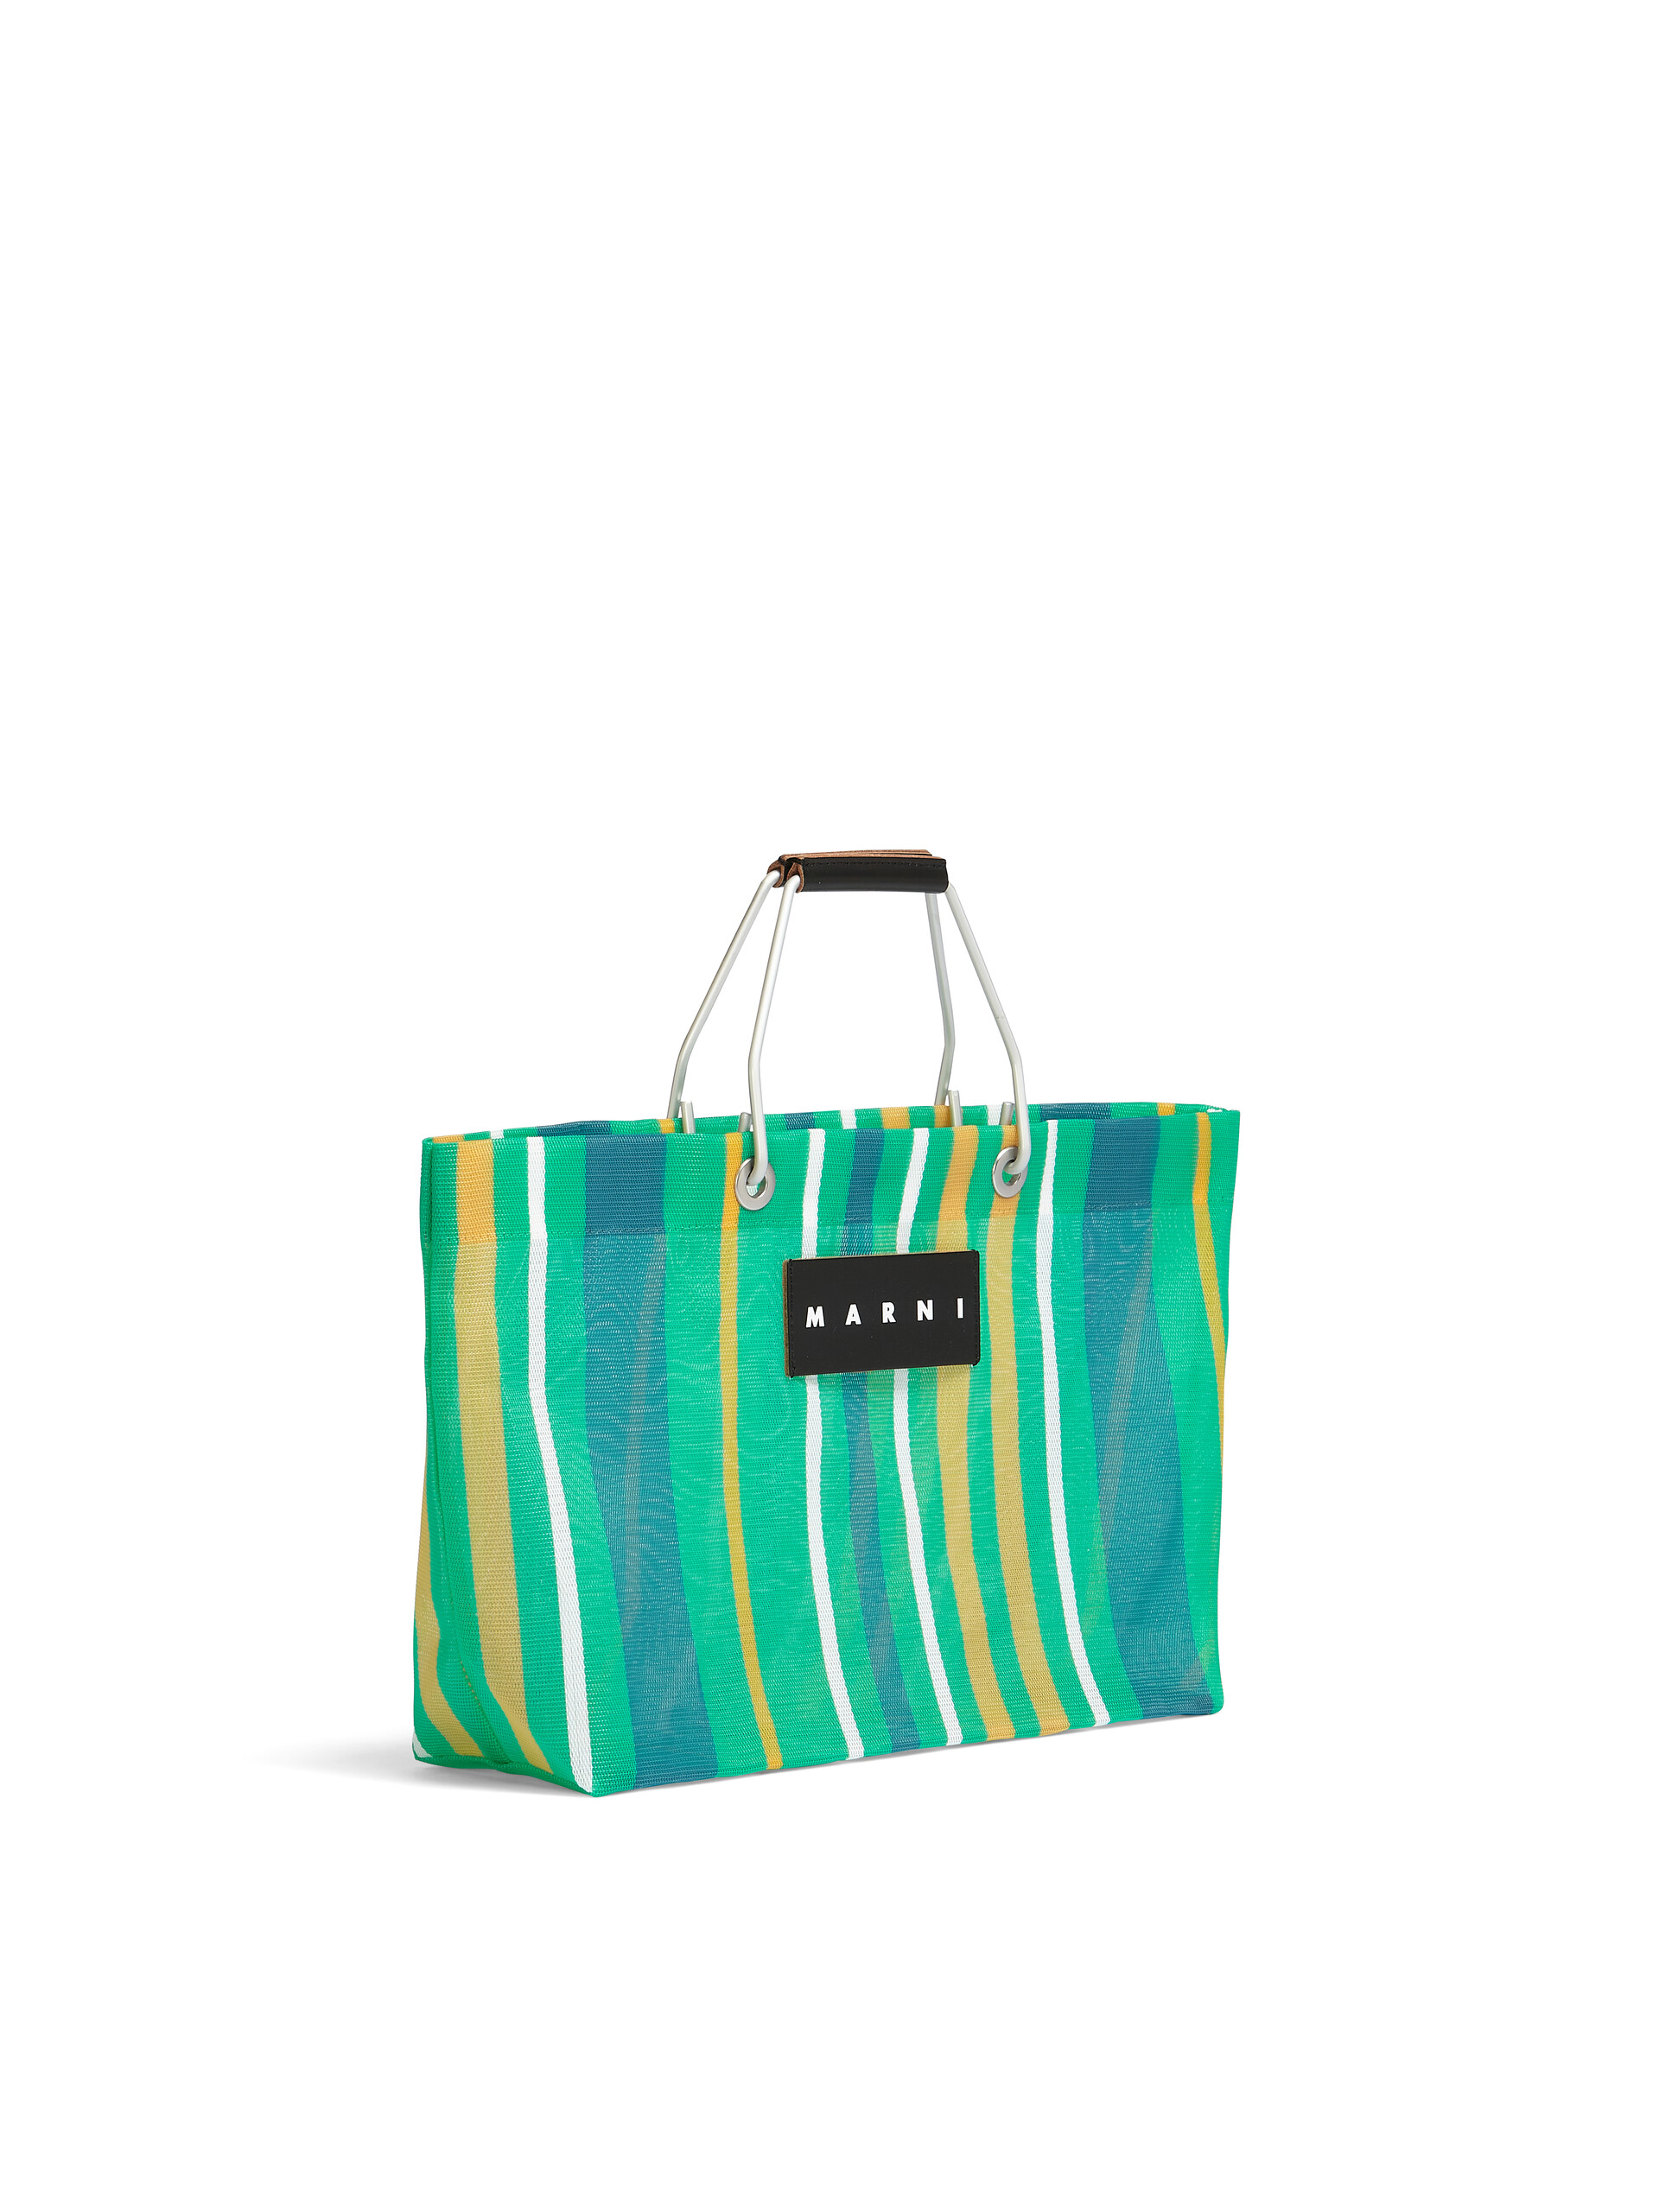 MARNI MARKET STRIPE MINI multicolor green bag - Shopping Bags - Image 2